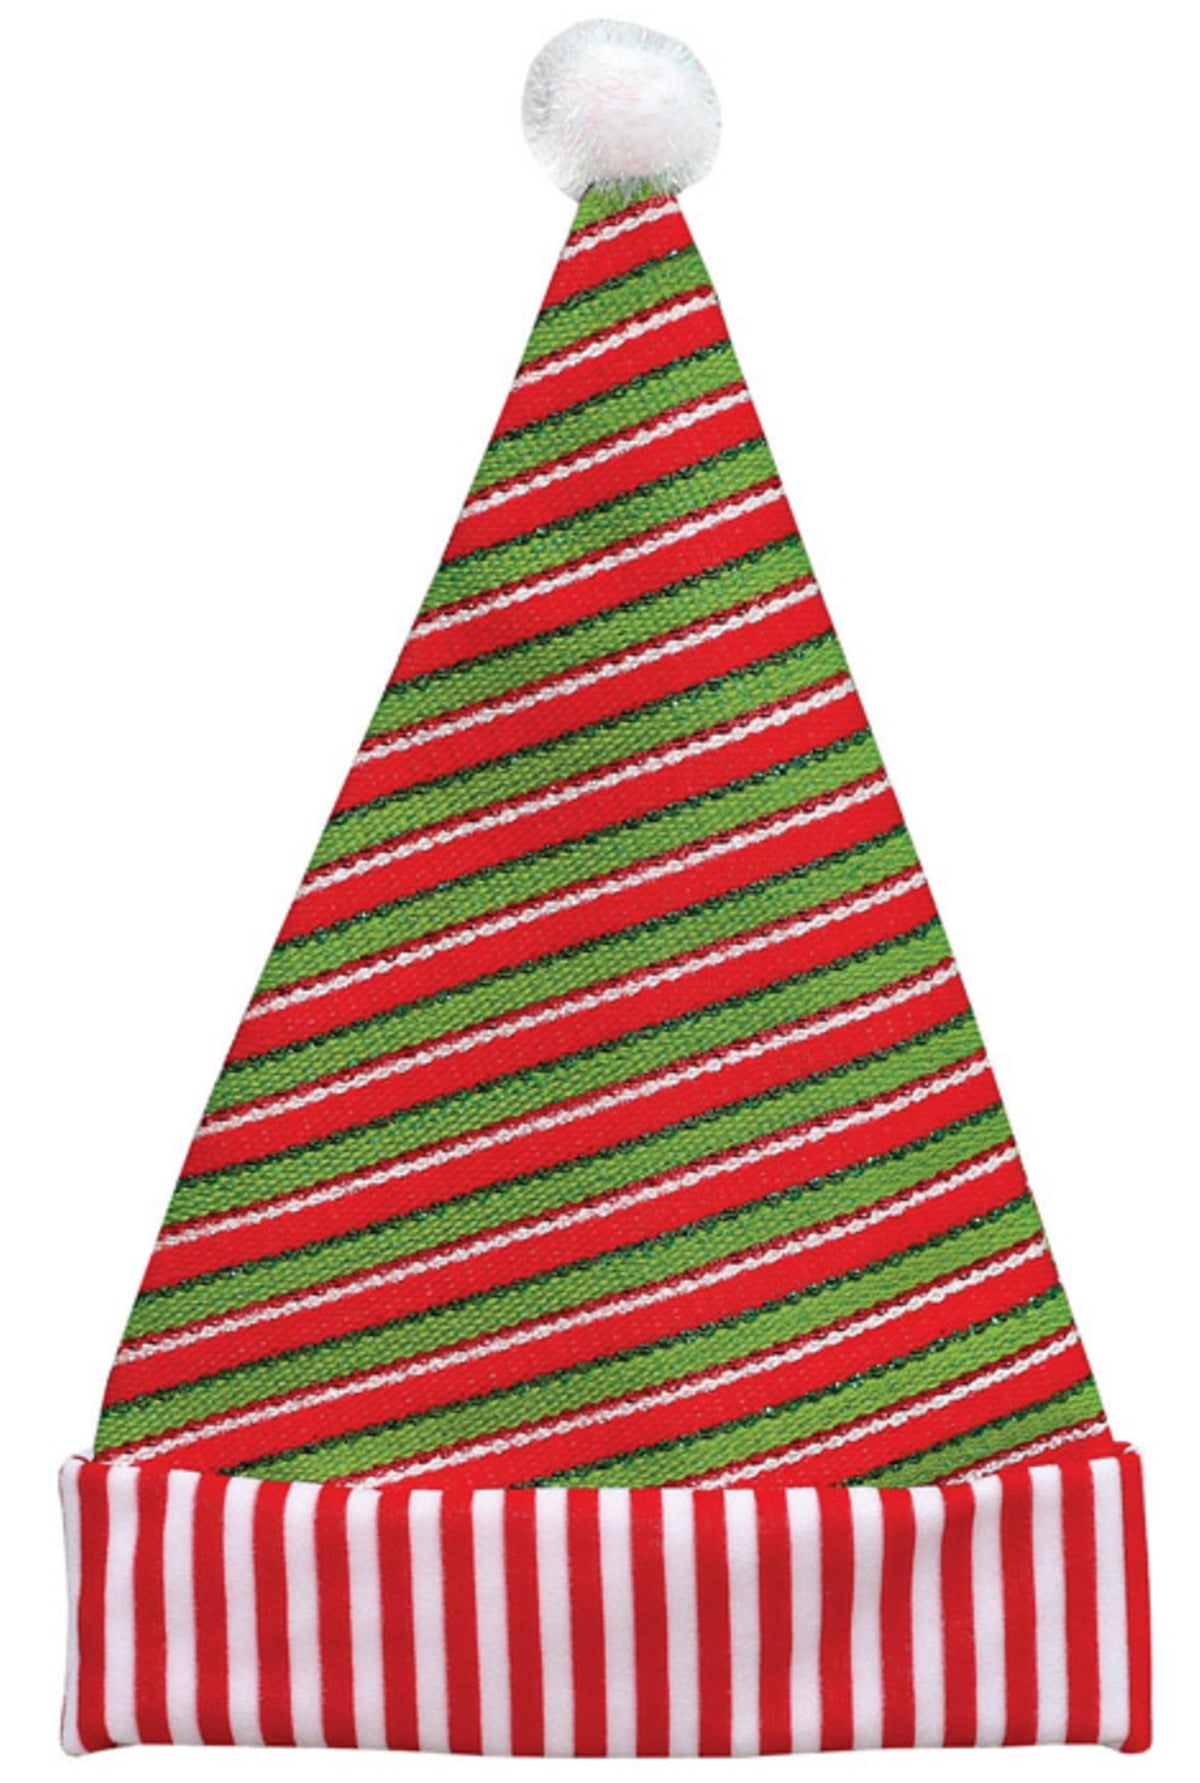 Dyno 0409524-1AC Candy Stripe Christmas Santa Hat, Red